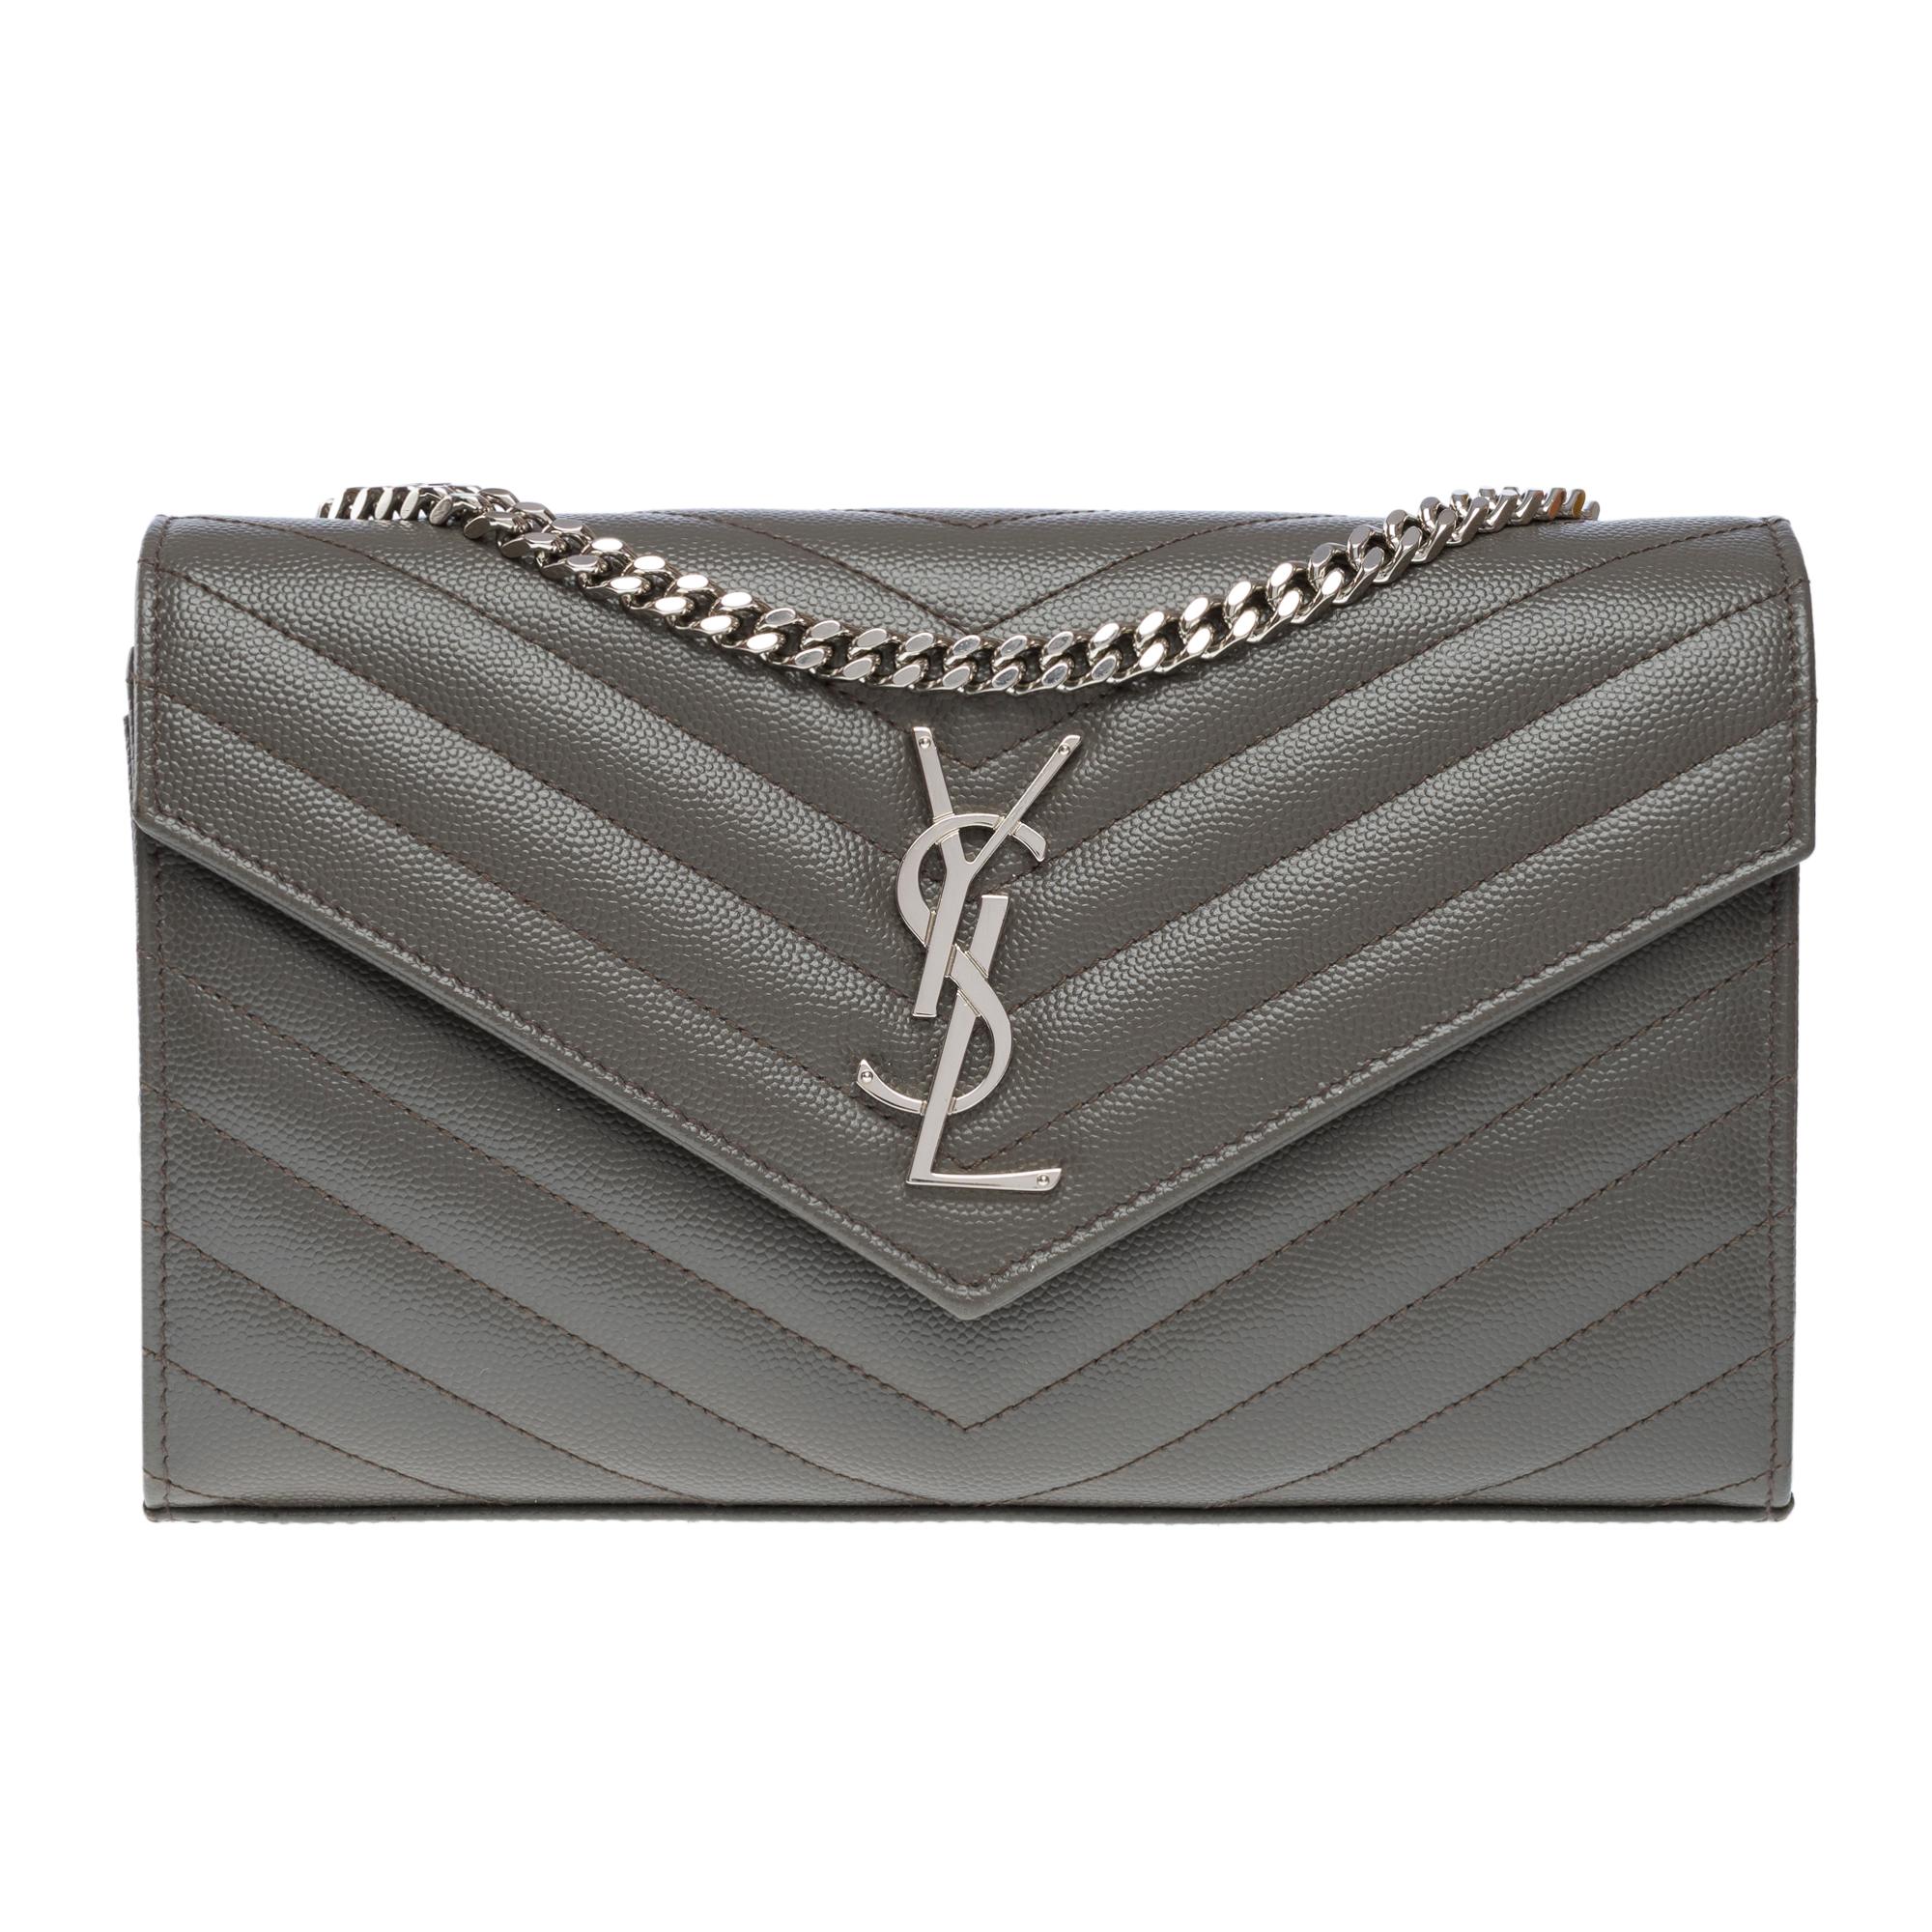 Women's New YSL Pochette Cassandre classic shoulder bag in Grey leather, SHW For Sale